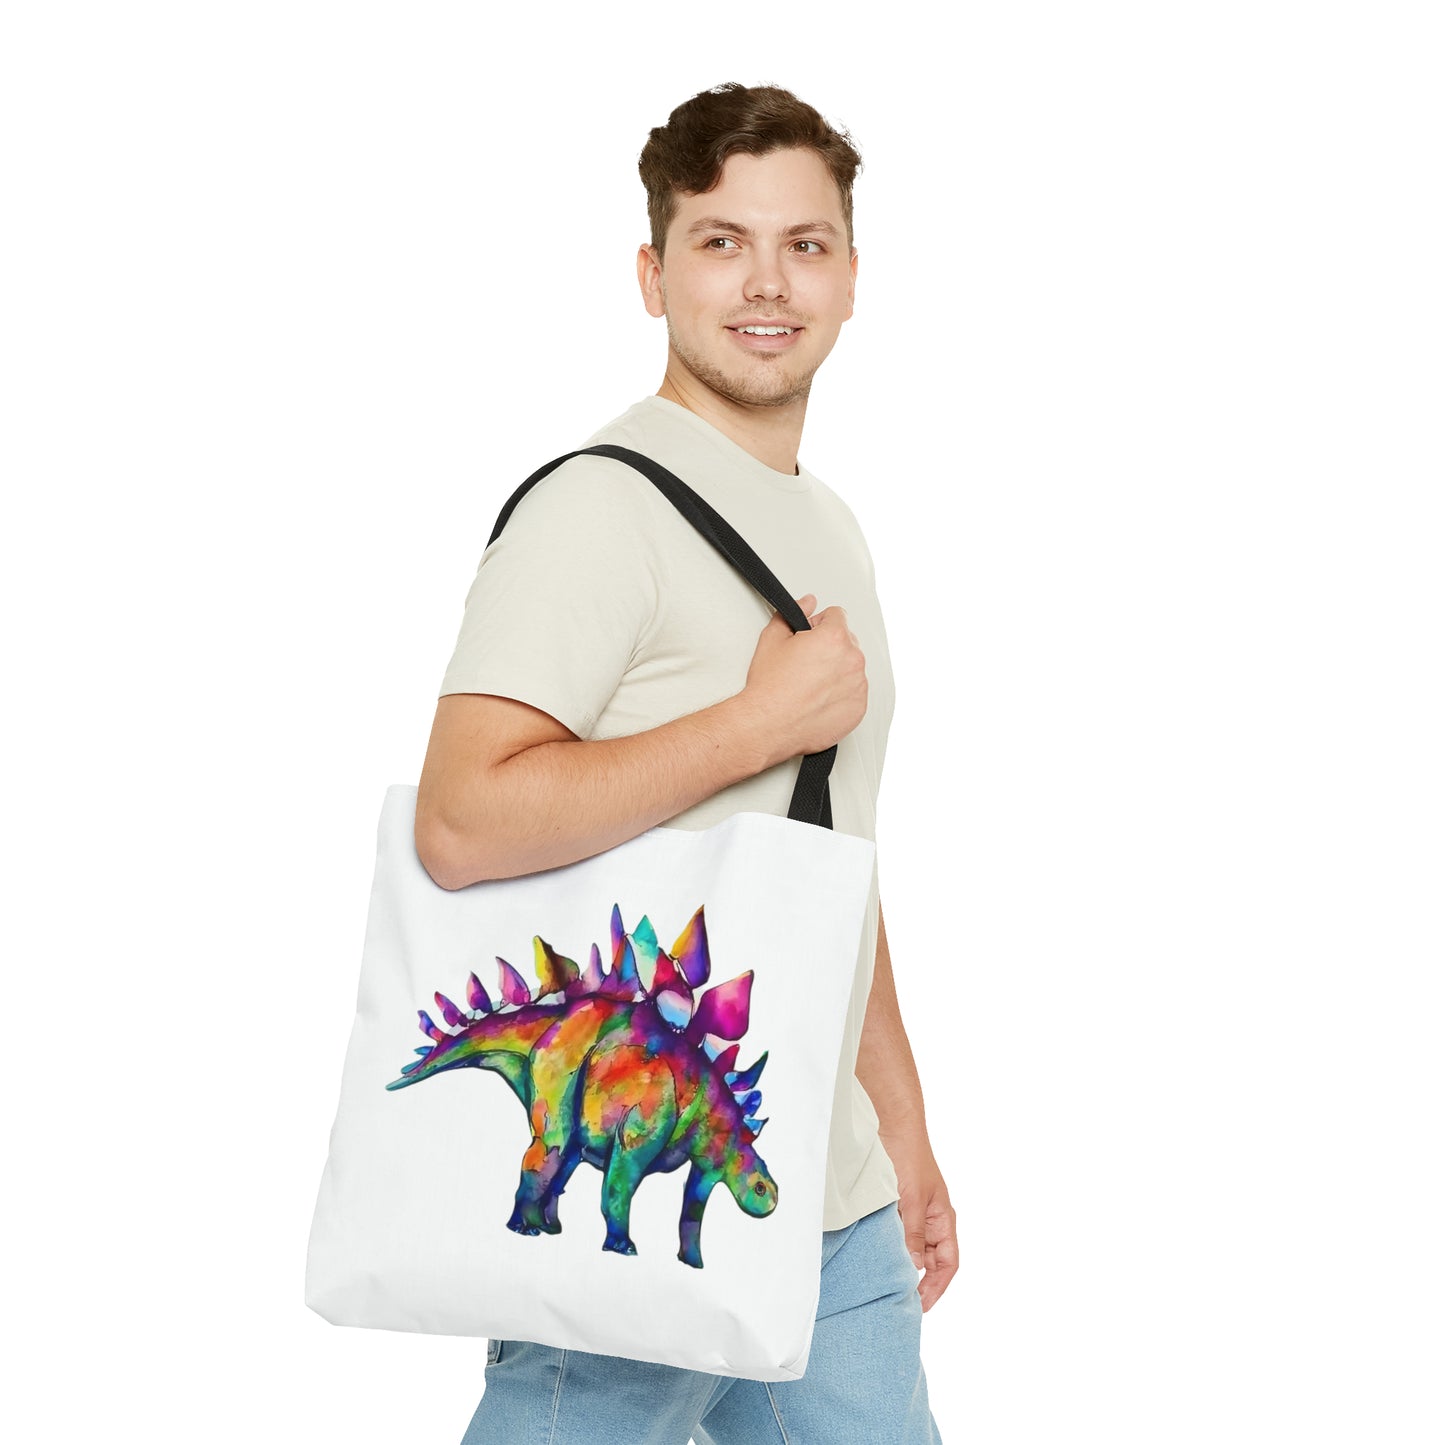 Punk Stegosaurus: Whimsical Tote Bag